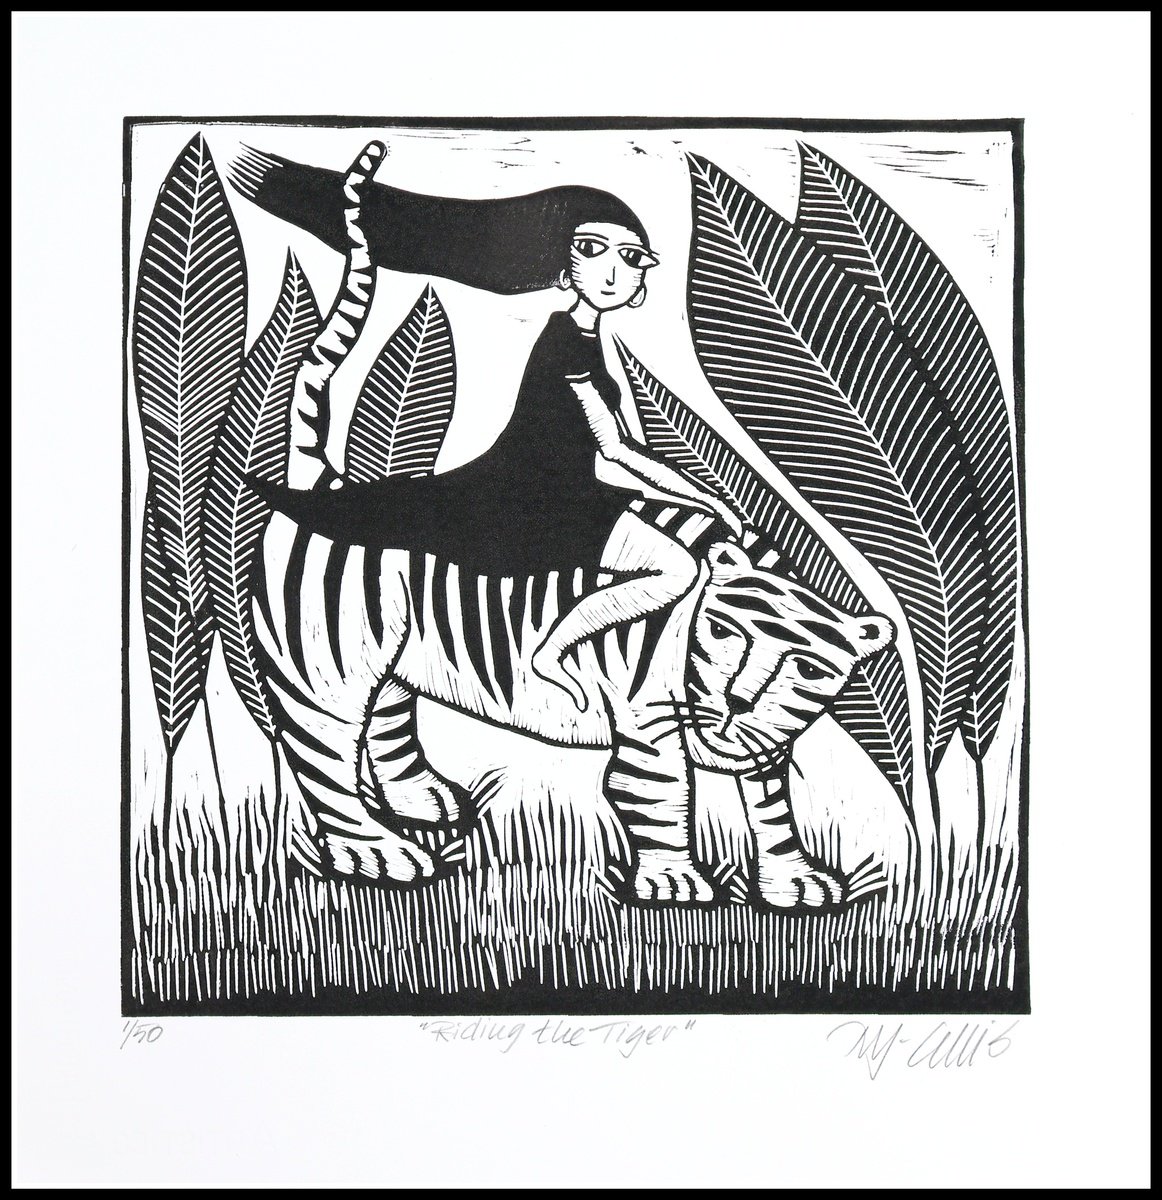 Riding the tiger by Mariann Johansen-Ellis